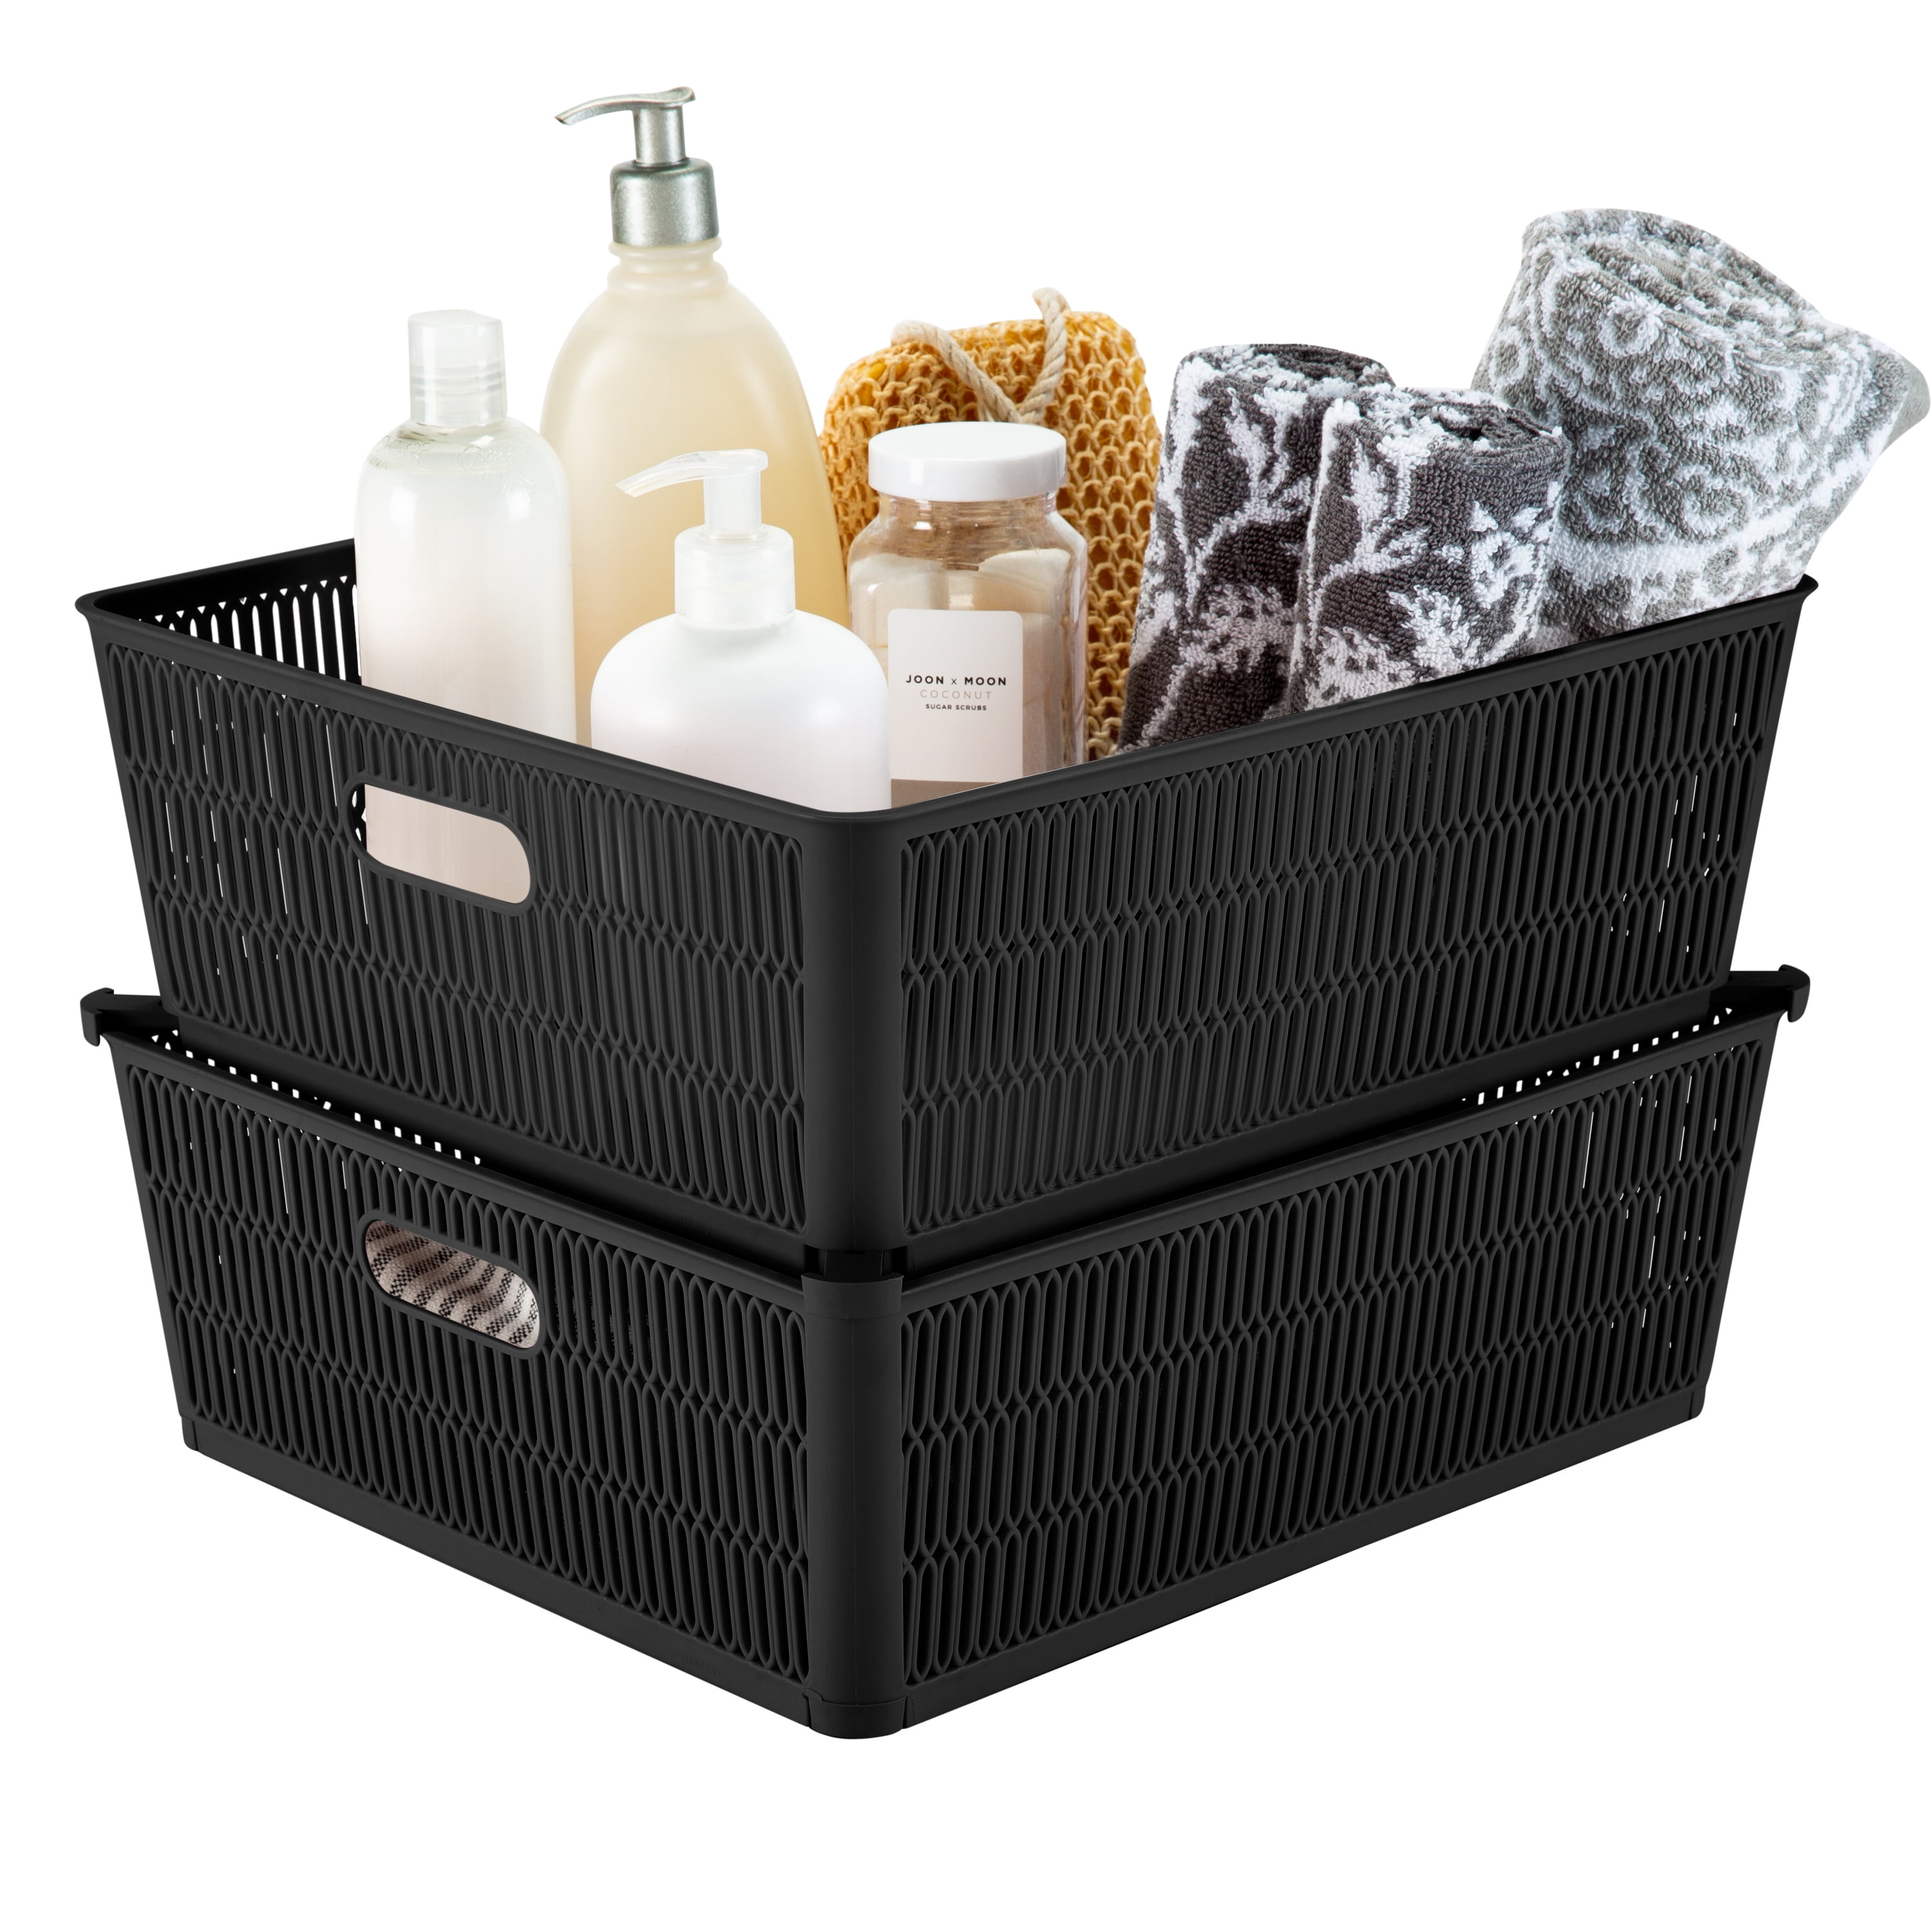 CRZDEAL Plastic Storage Baskets(Set of 6,Black, Light Gray, Dark